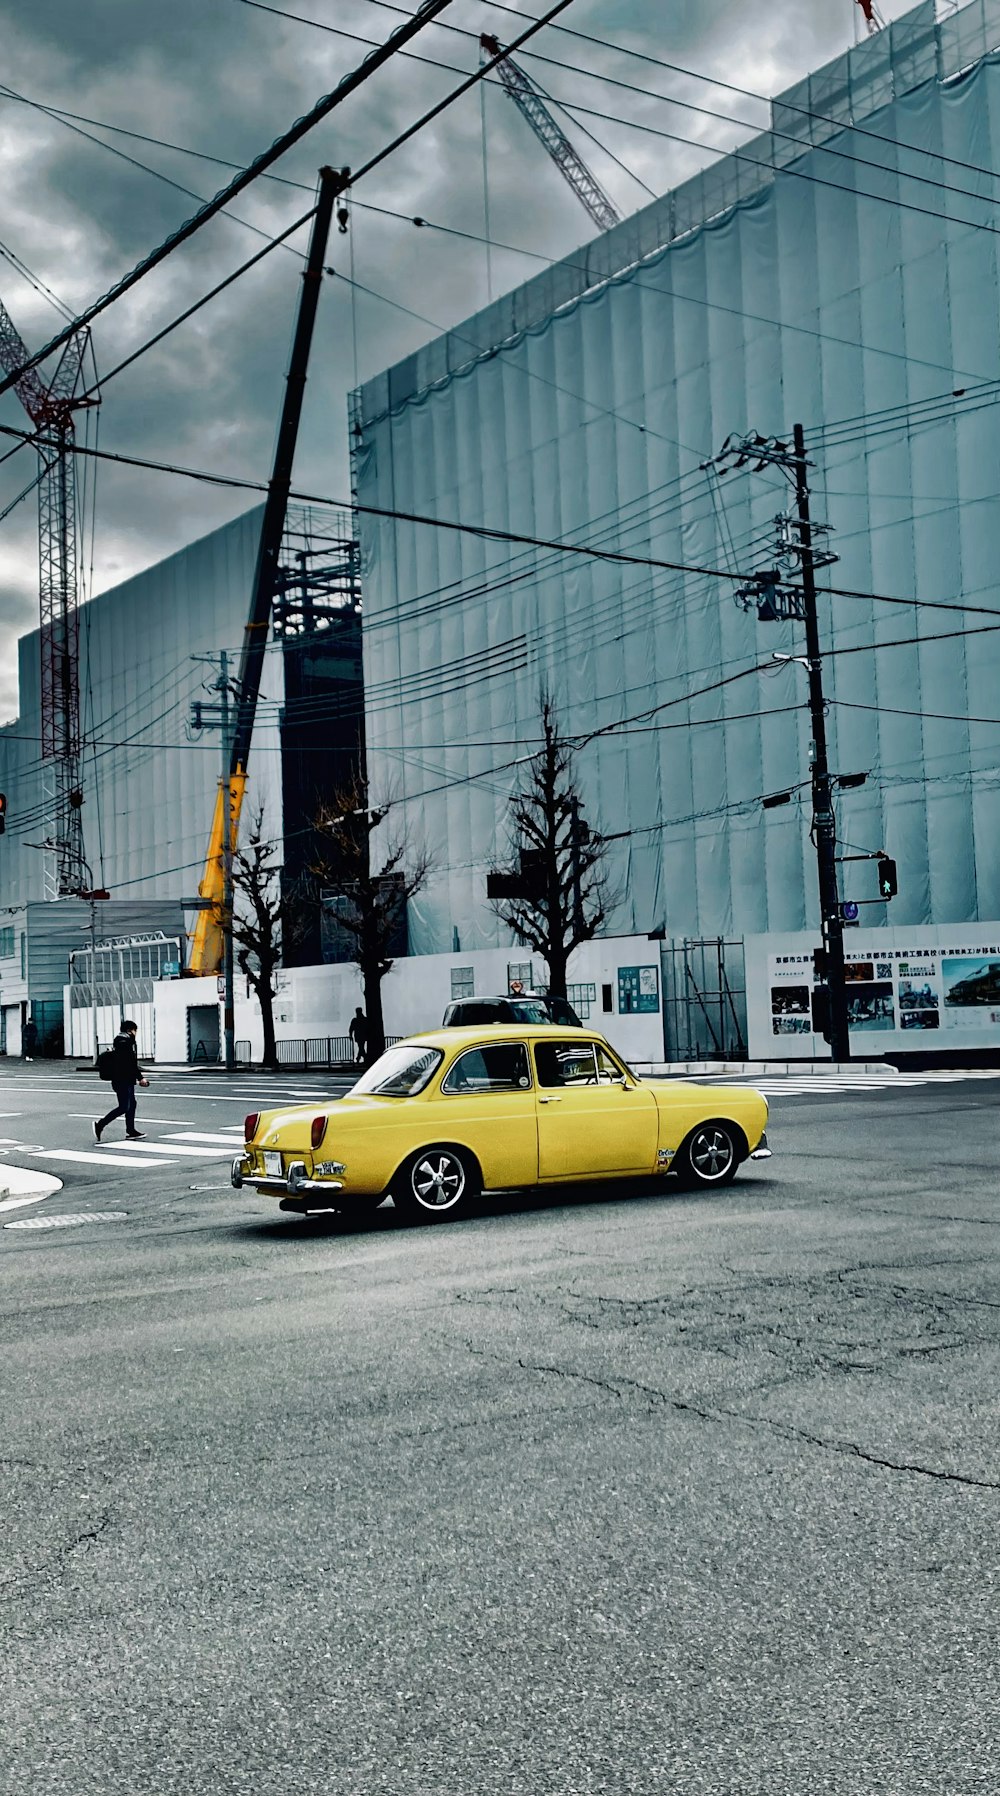 Un coche amarillo circulando por una calle junto a un edificio alto